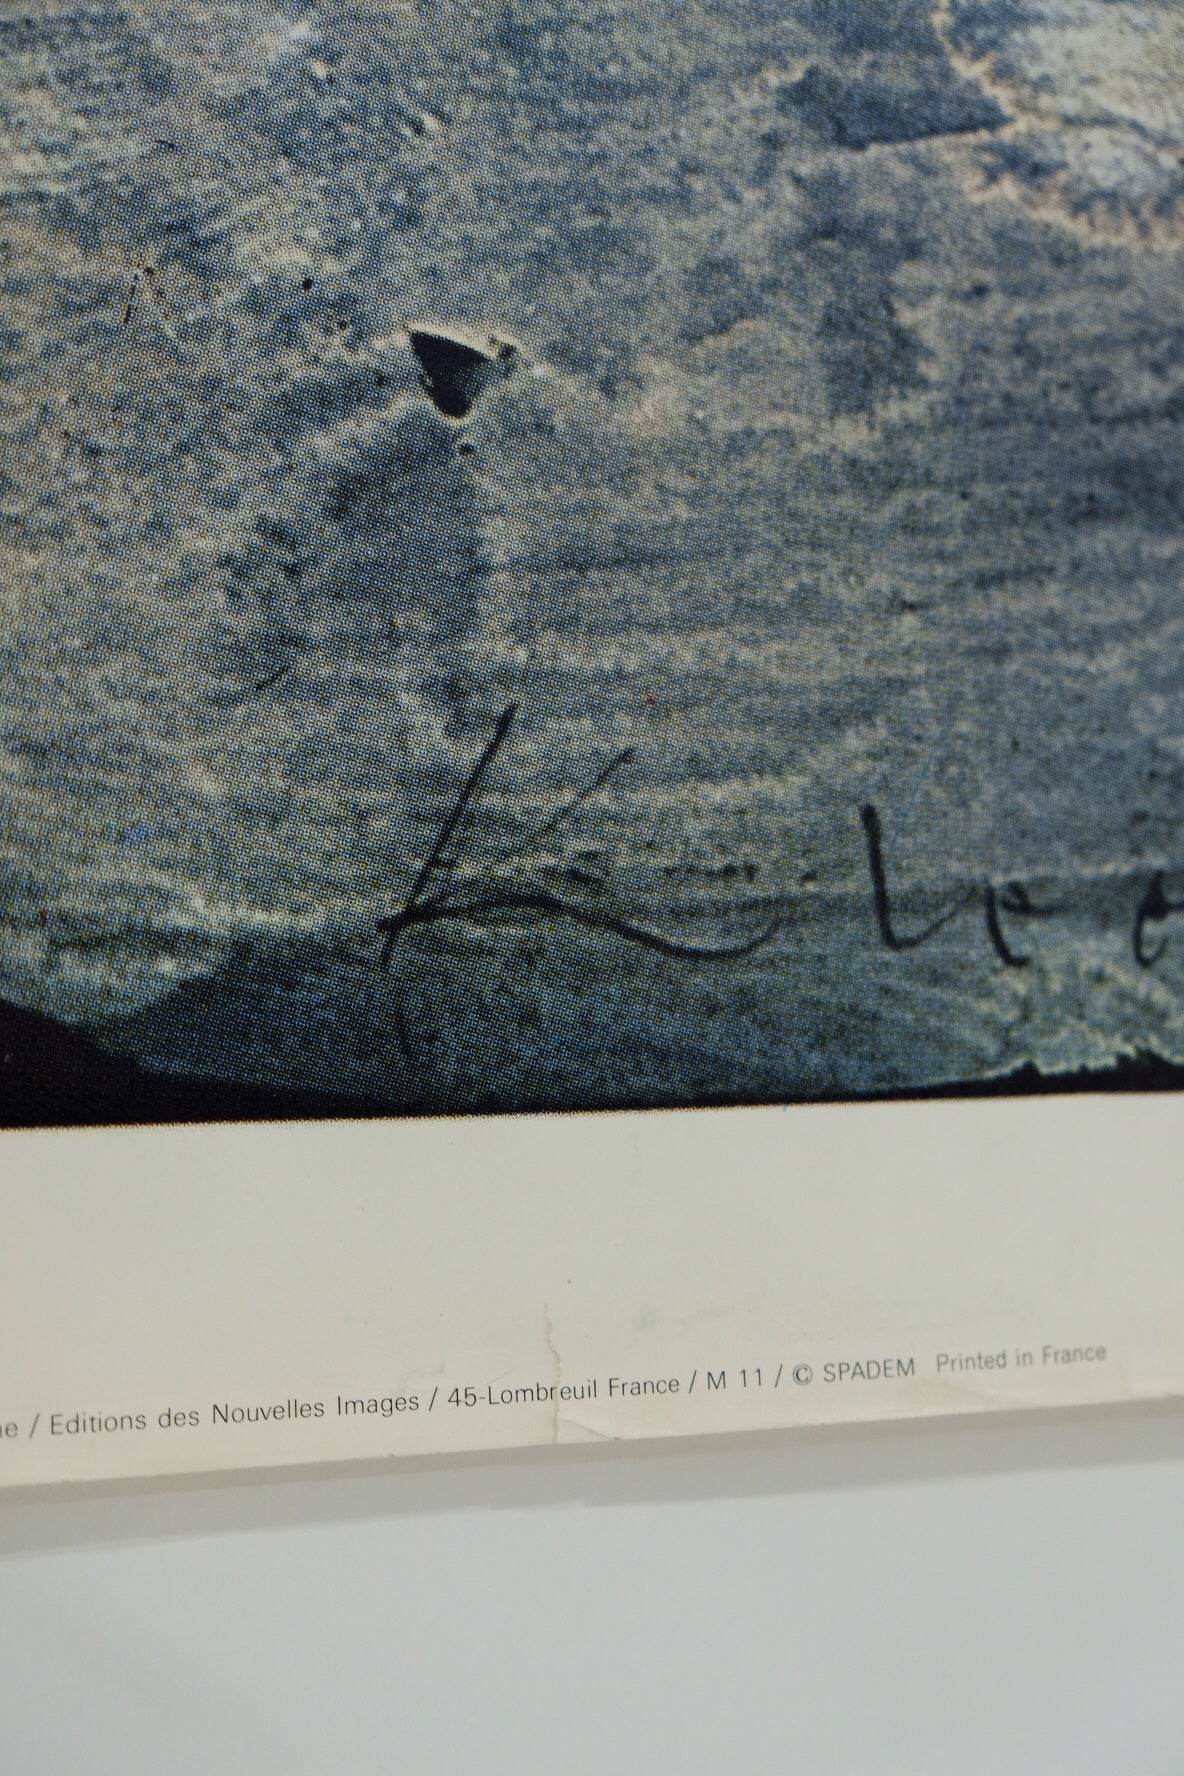 Paul Klee "Mine Grave" Print